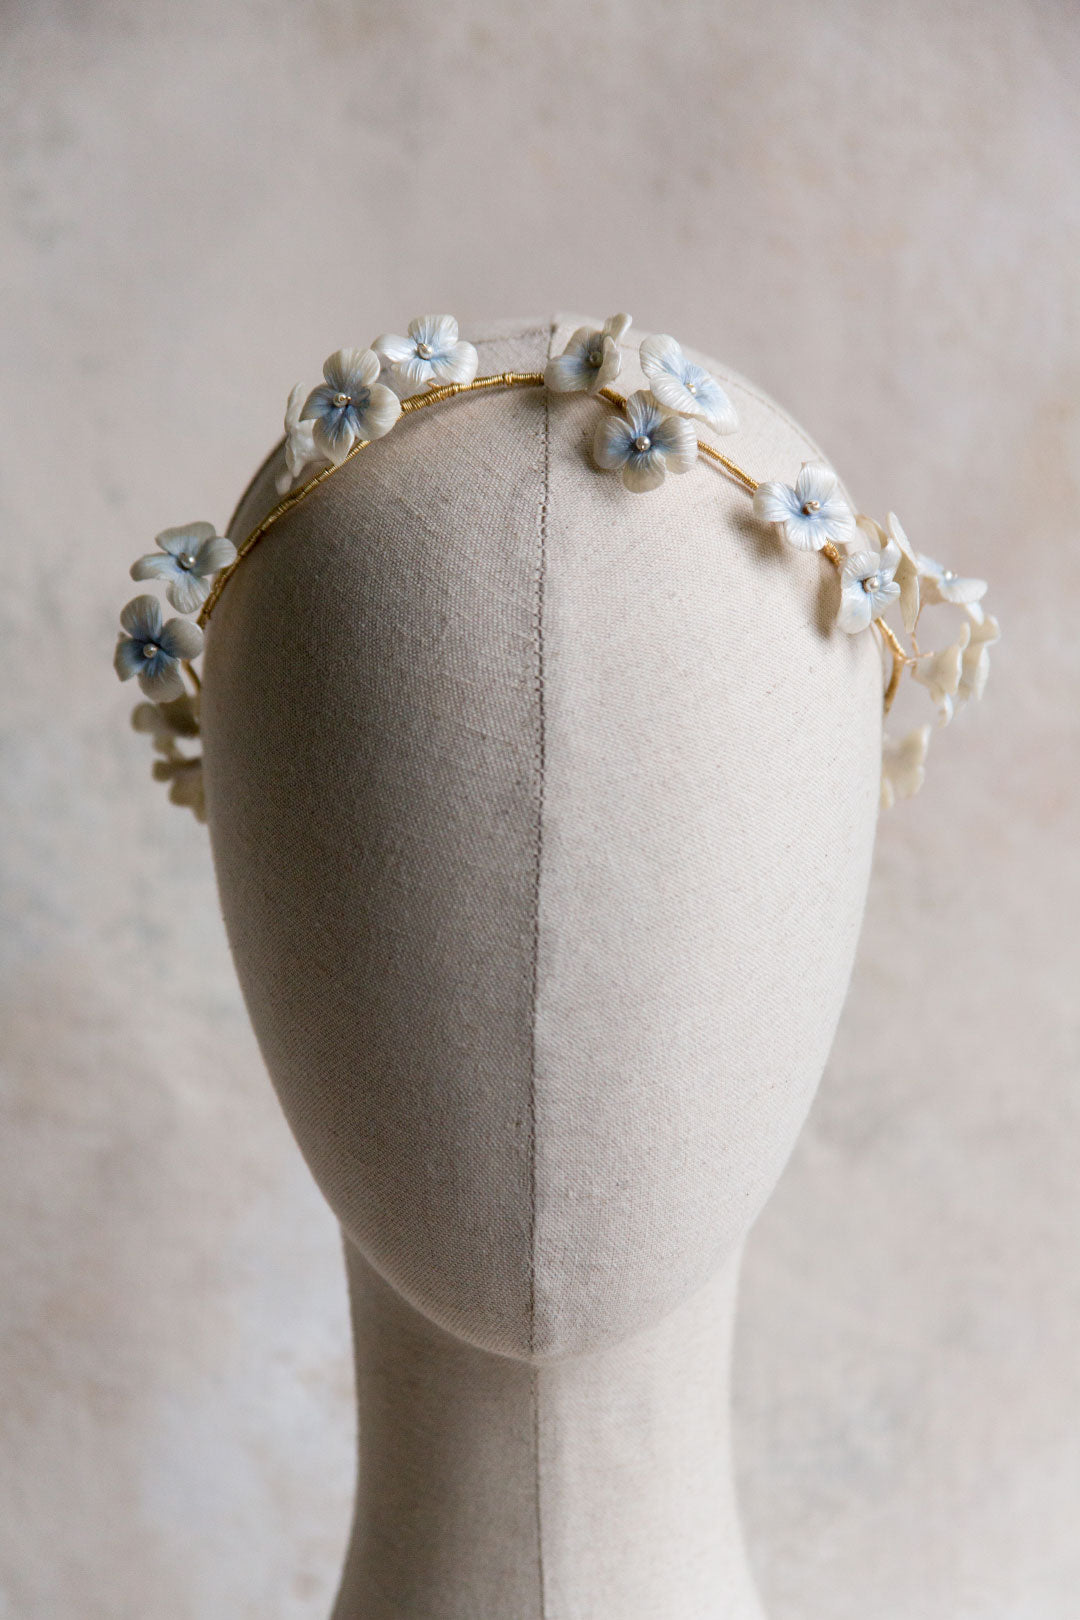 Azure Wildflower Bridal Hair Accessorie by Erin Rhyne for Claire Pettibone